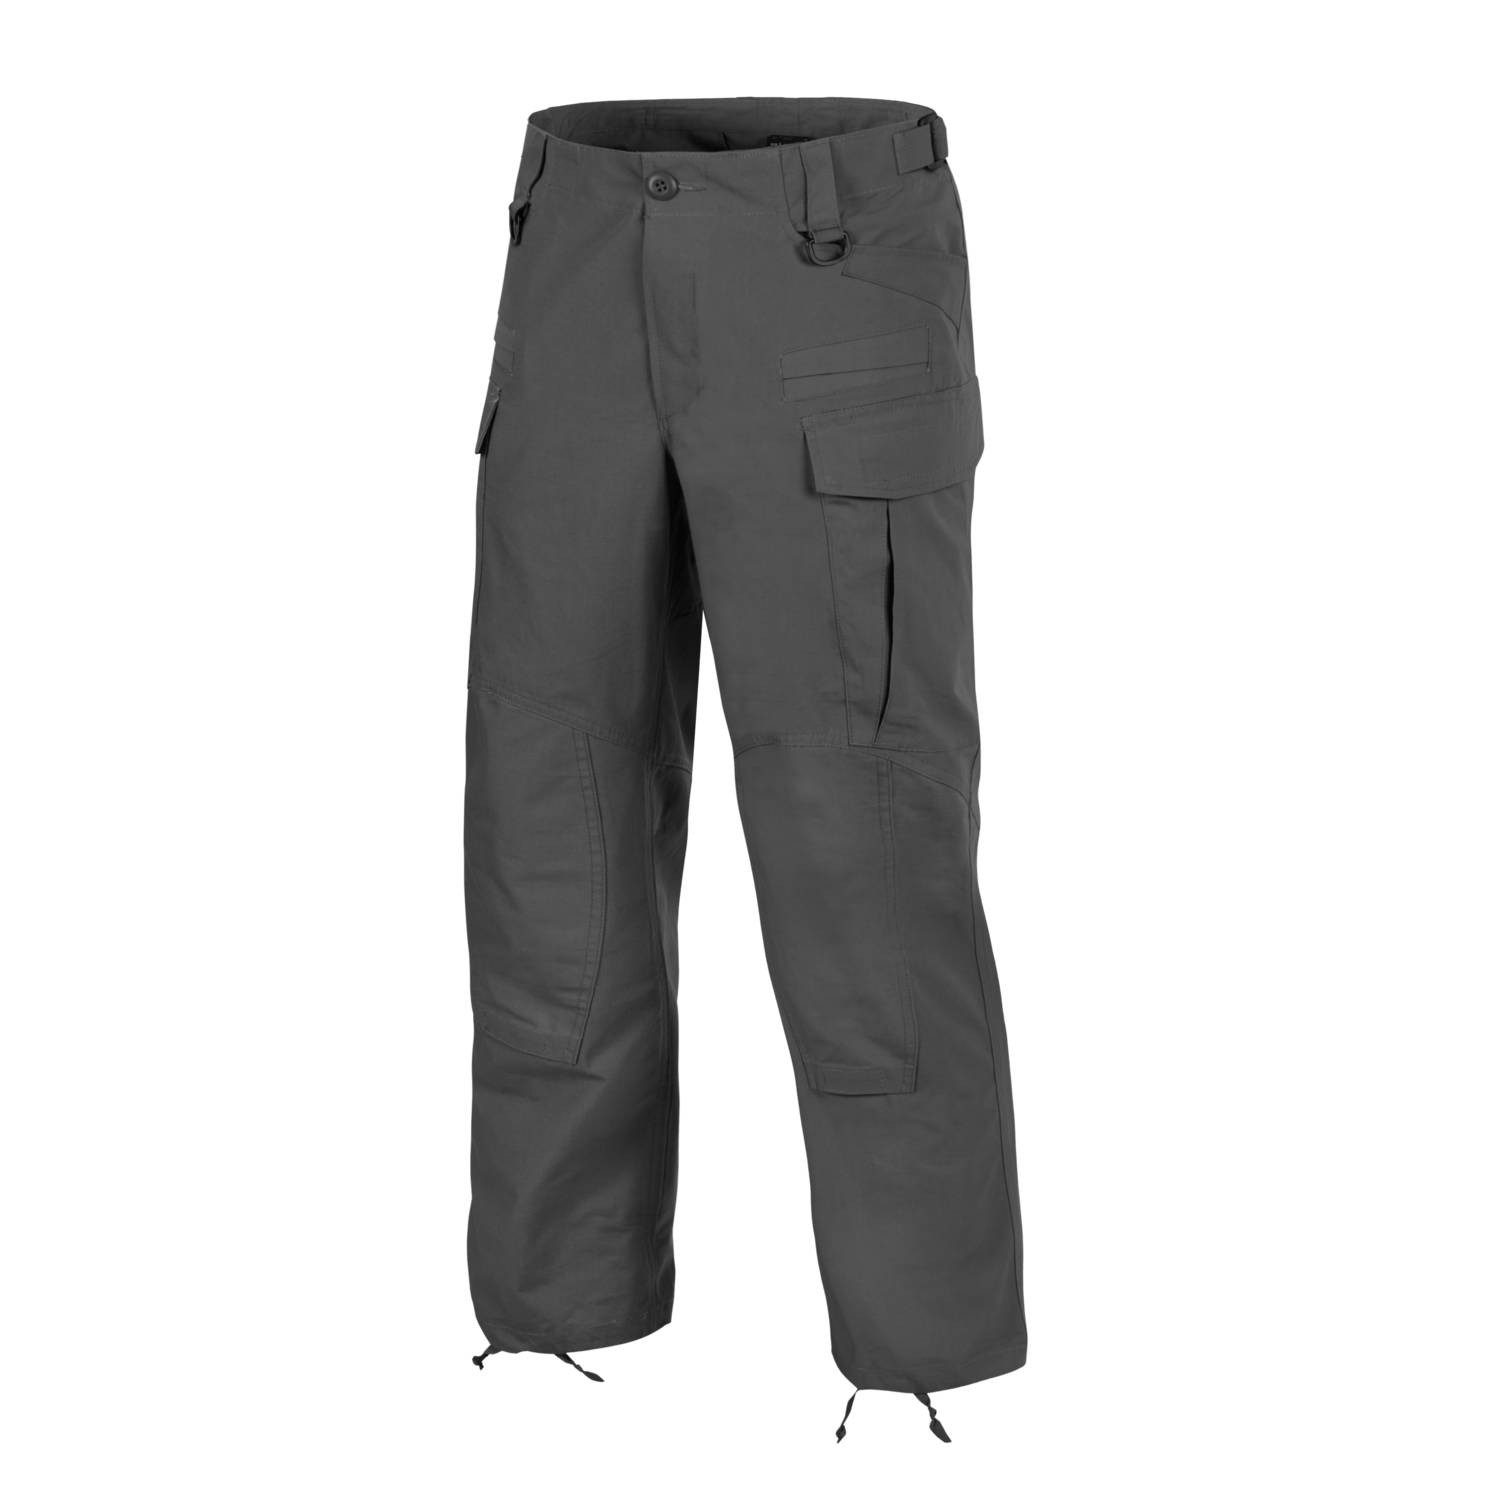 JCB Trade Rip-Stop Mens Work Trousers Cordura Knee Pad Pockets Tough Pants  Black | eBay